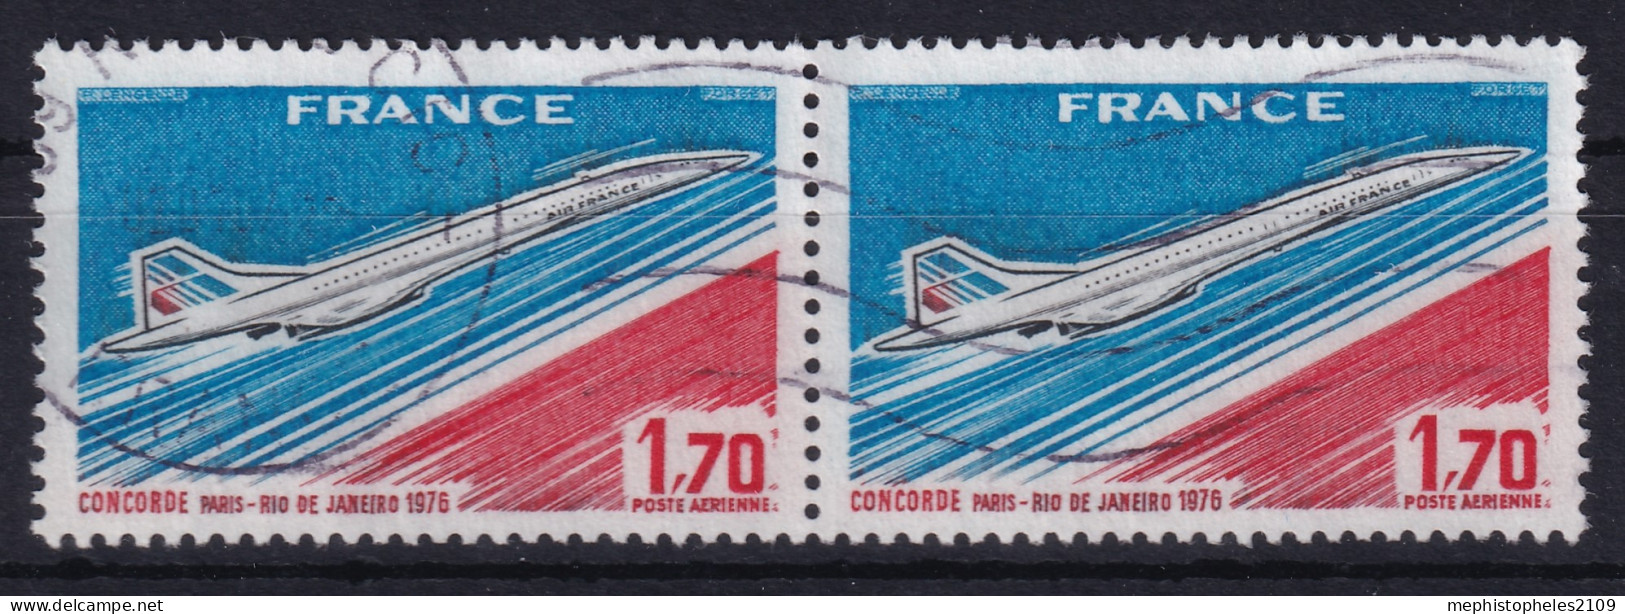 FRANCE 1976 - Canceled - YT 49 - Poste Aérienne - Pair - 1960-.... Used